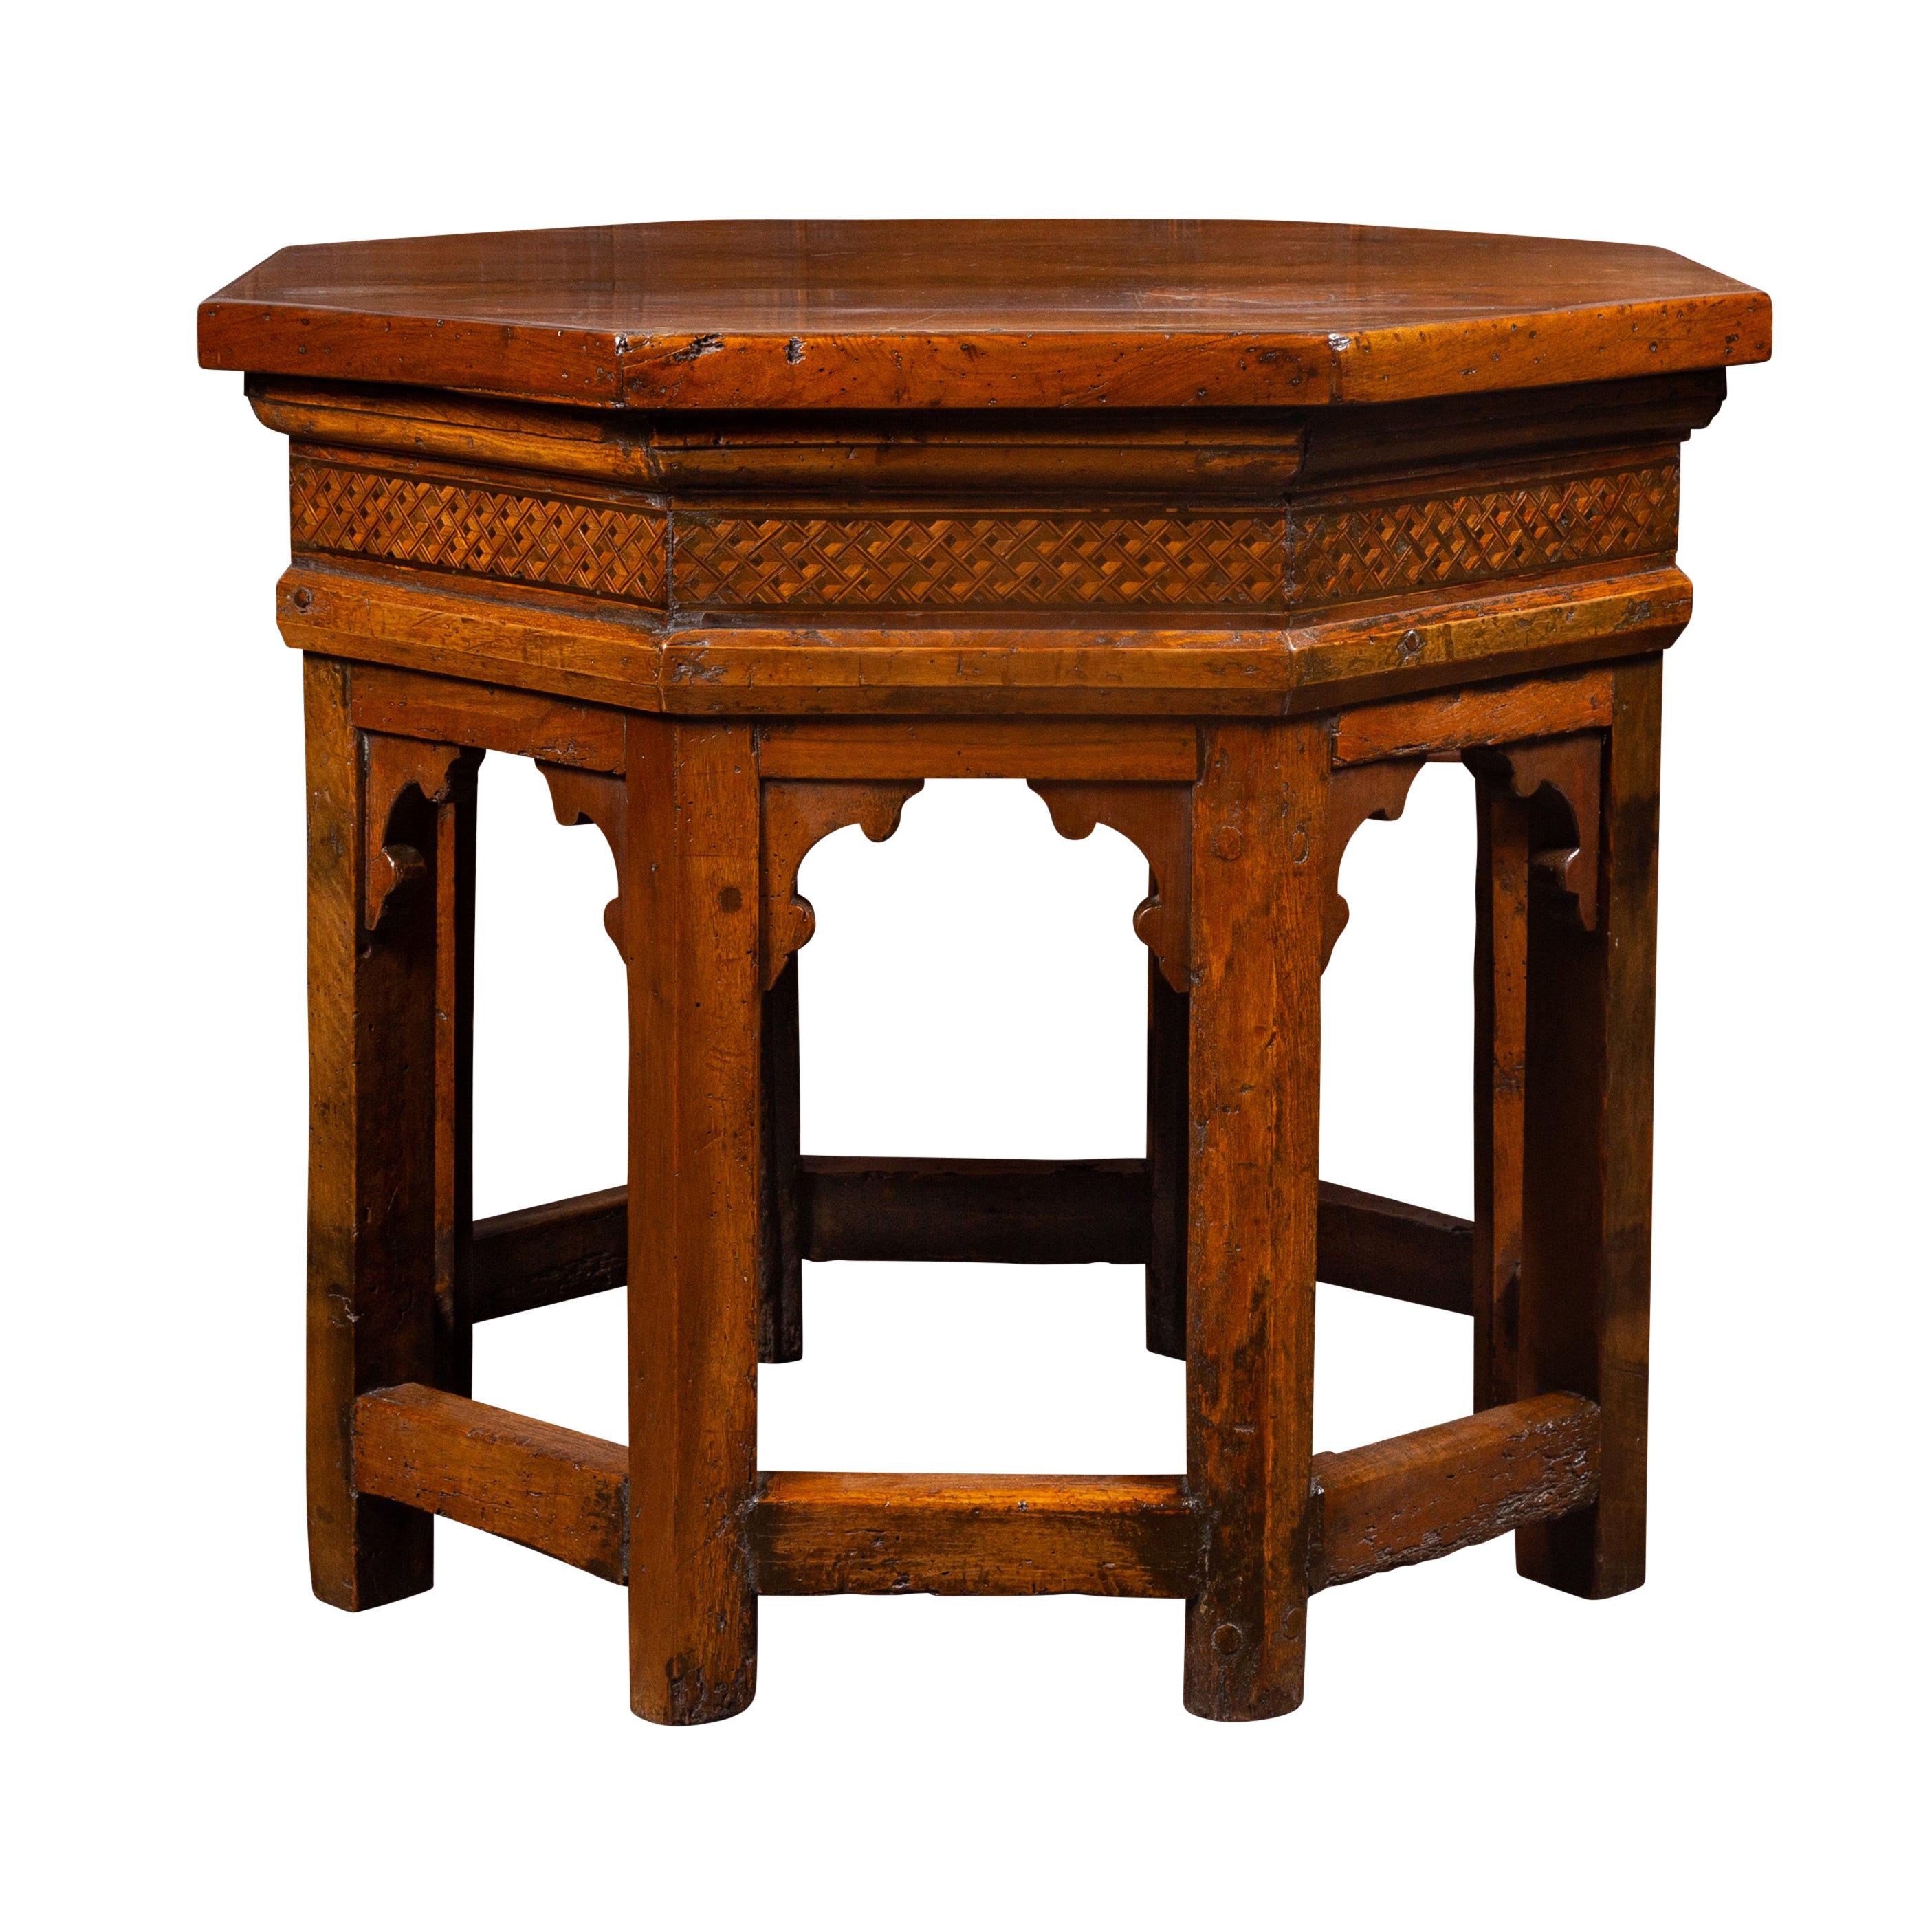 Italian 19th Century Walnut Octagonal Table with Inlaid Trompe-l'Œil Motifs For Sale